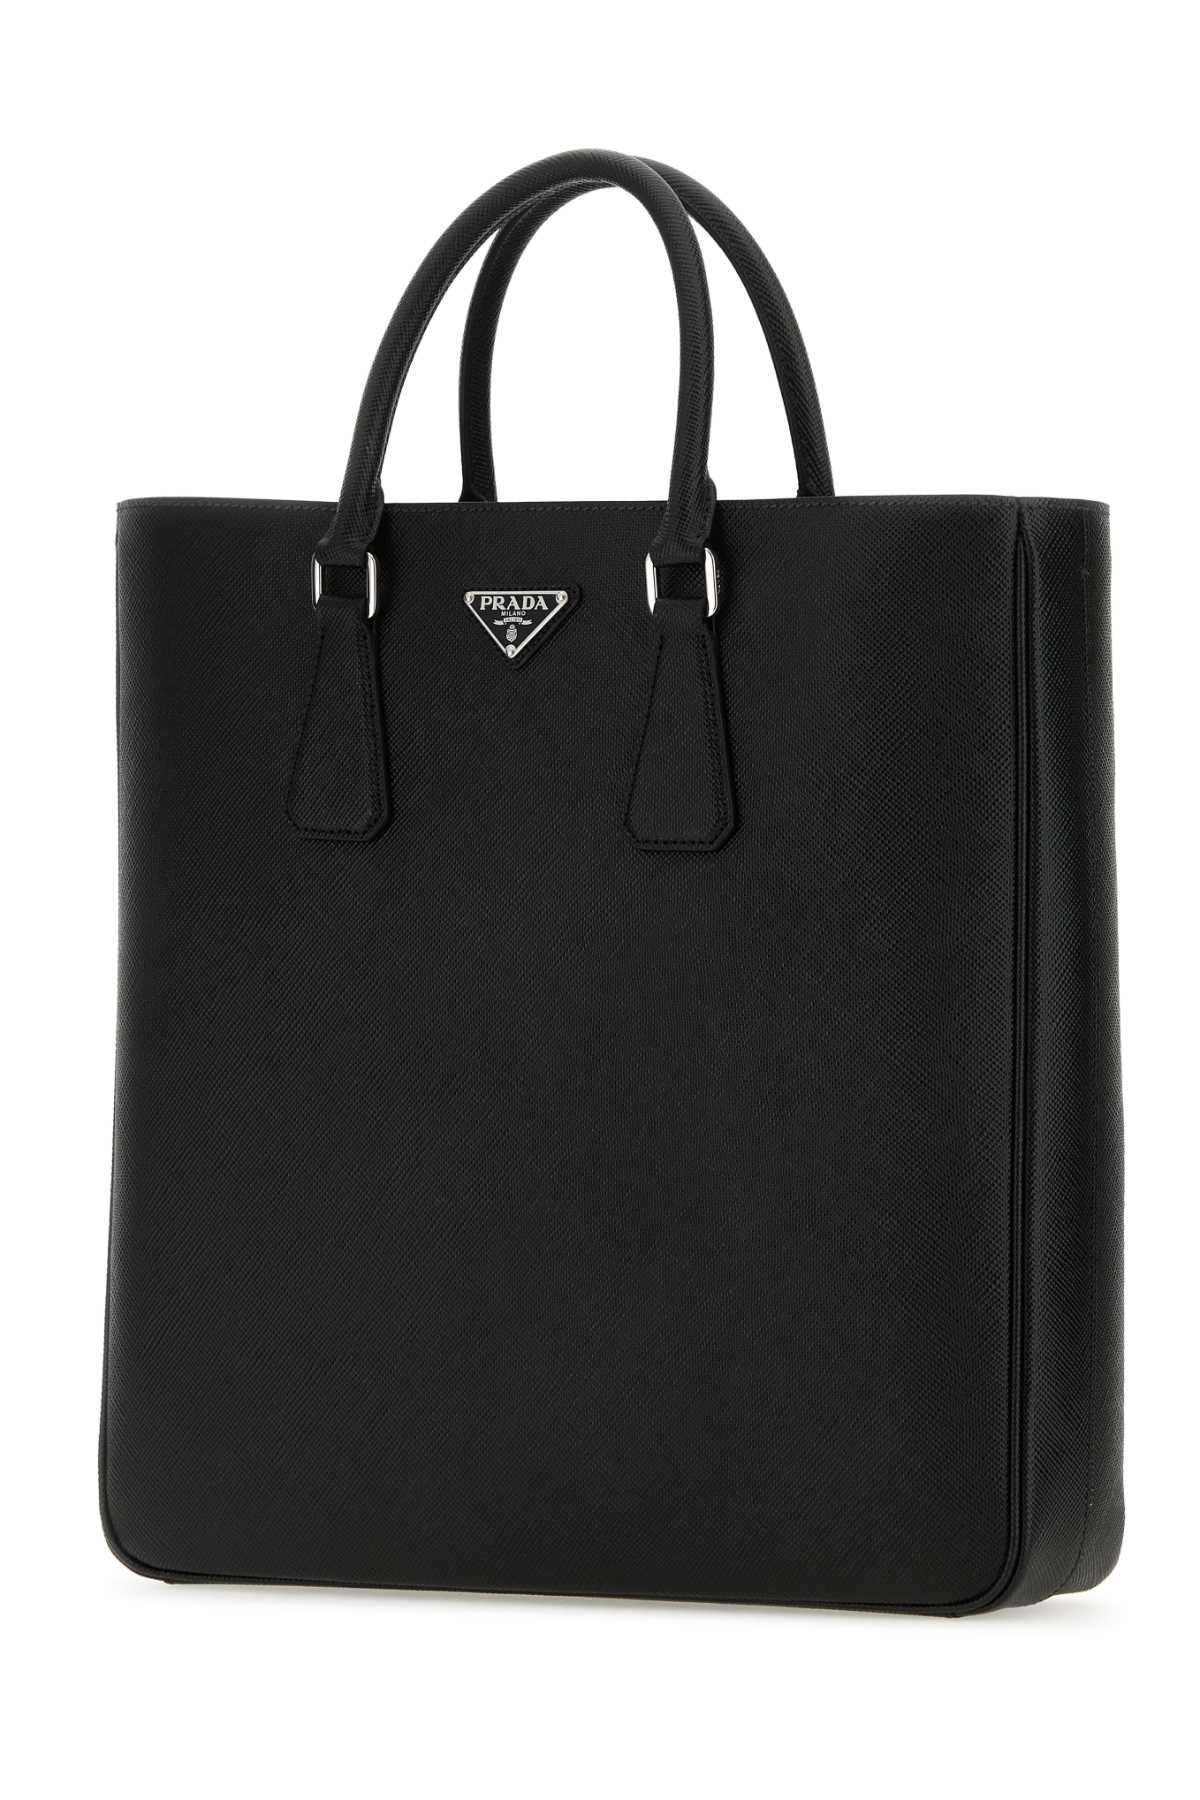 Prada Black Leather Shopping Bag In Nero